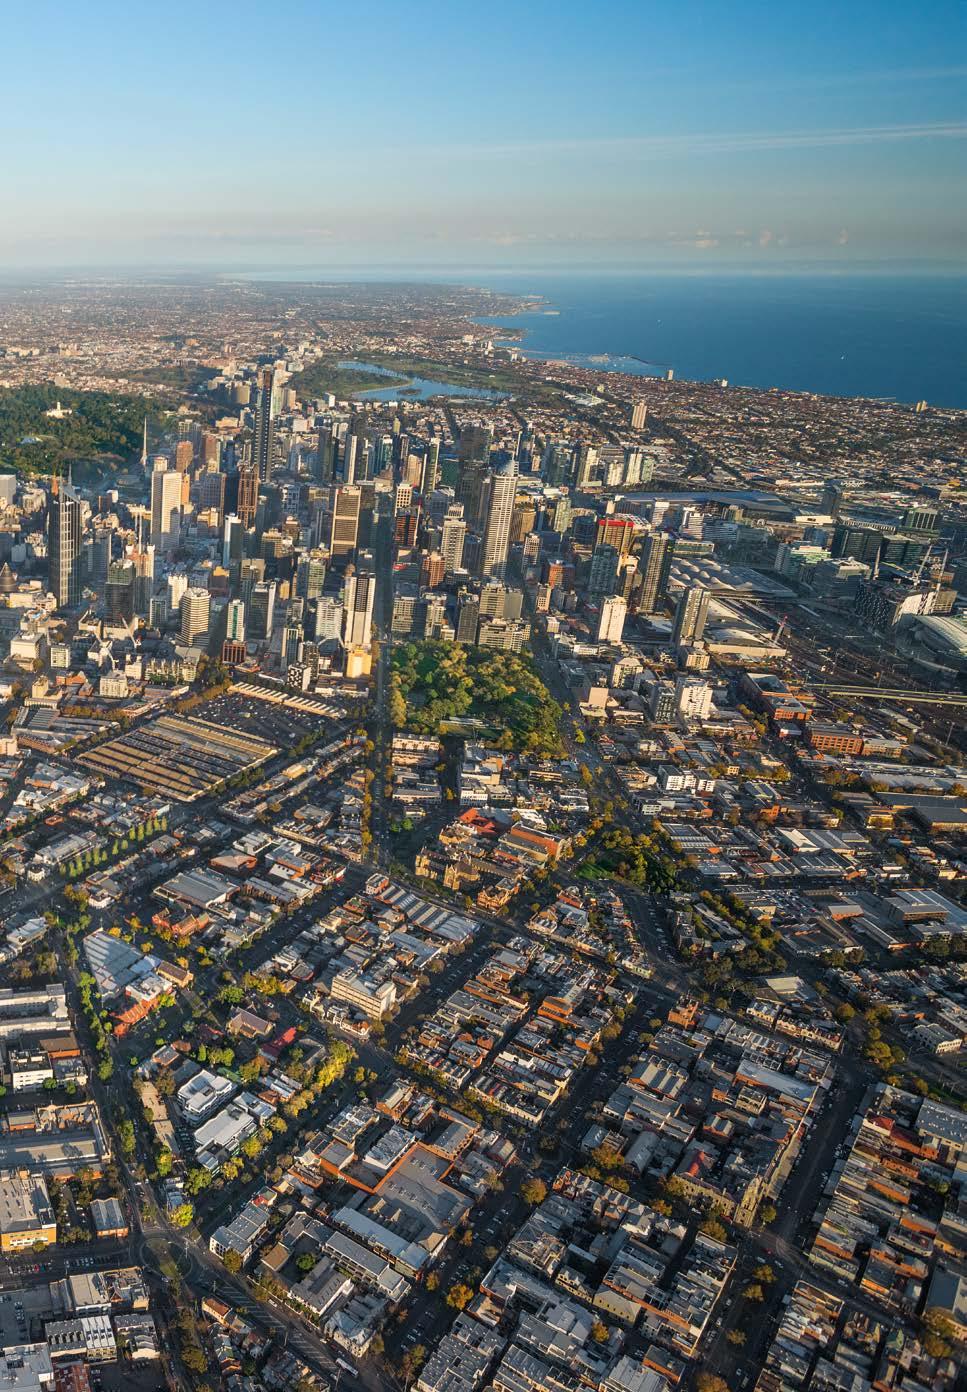 Albert Park Lake Rialto Towers Melbourne CBD Docklands